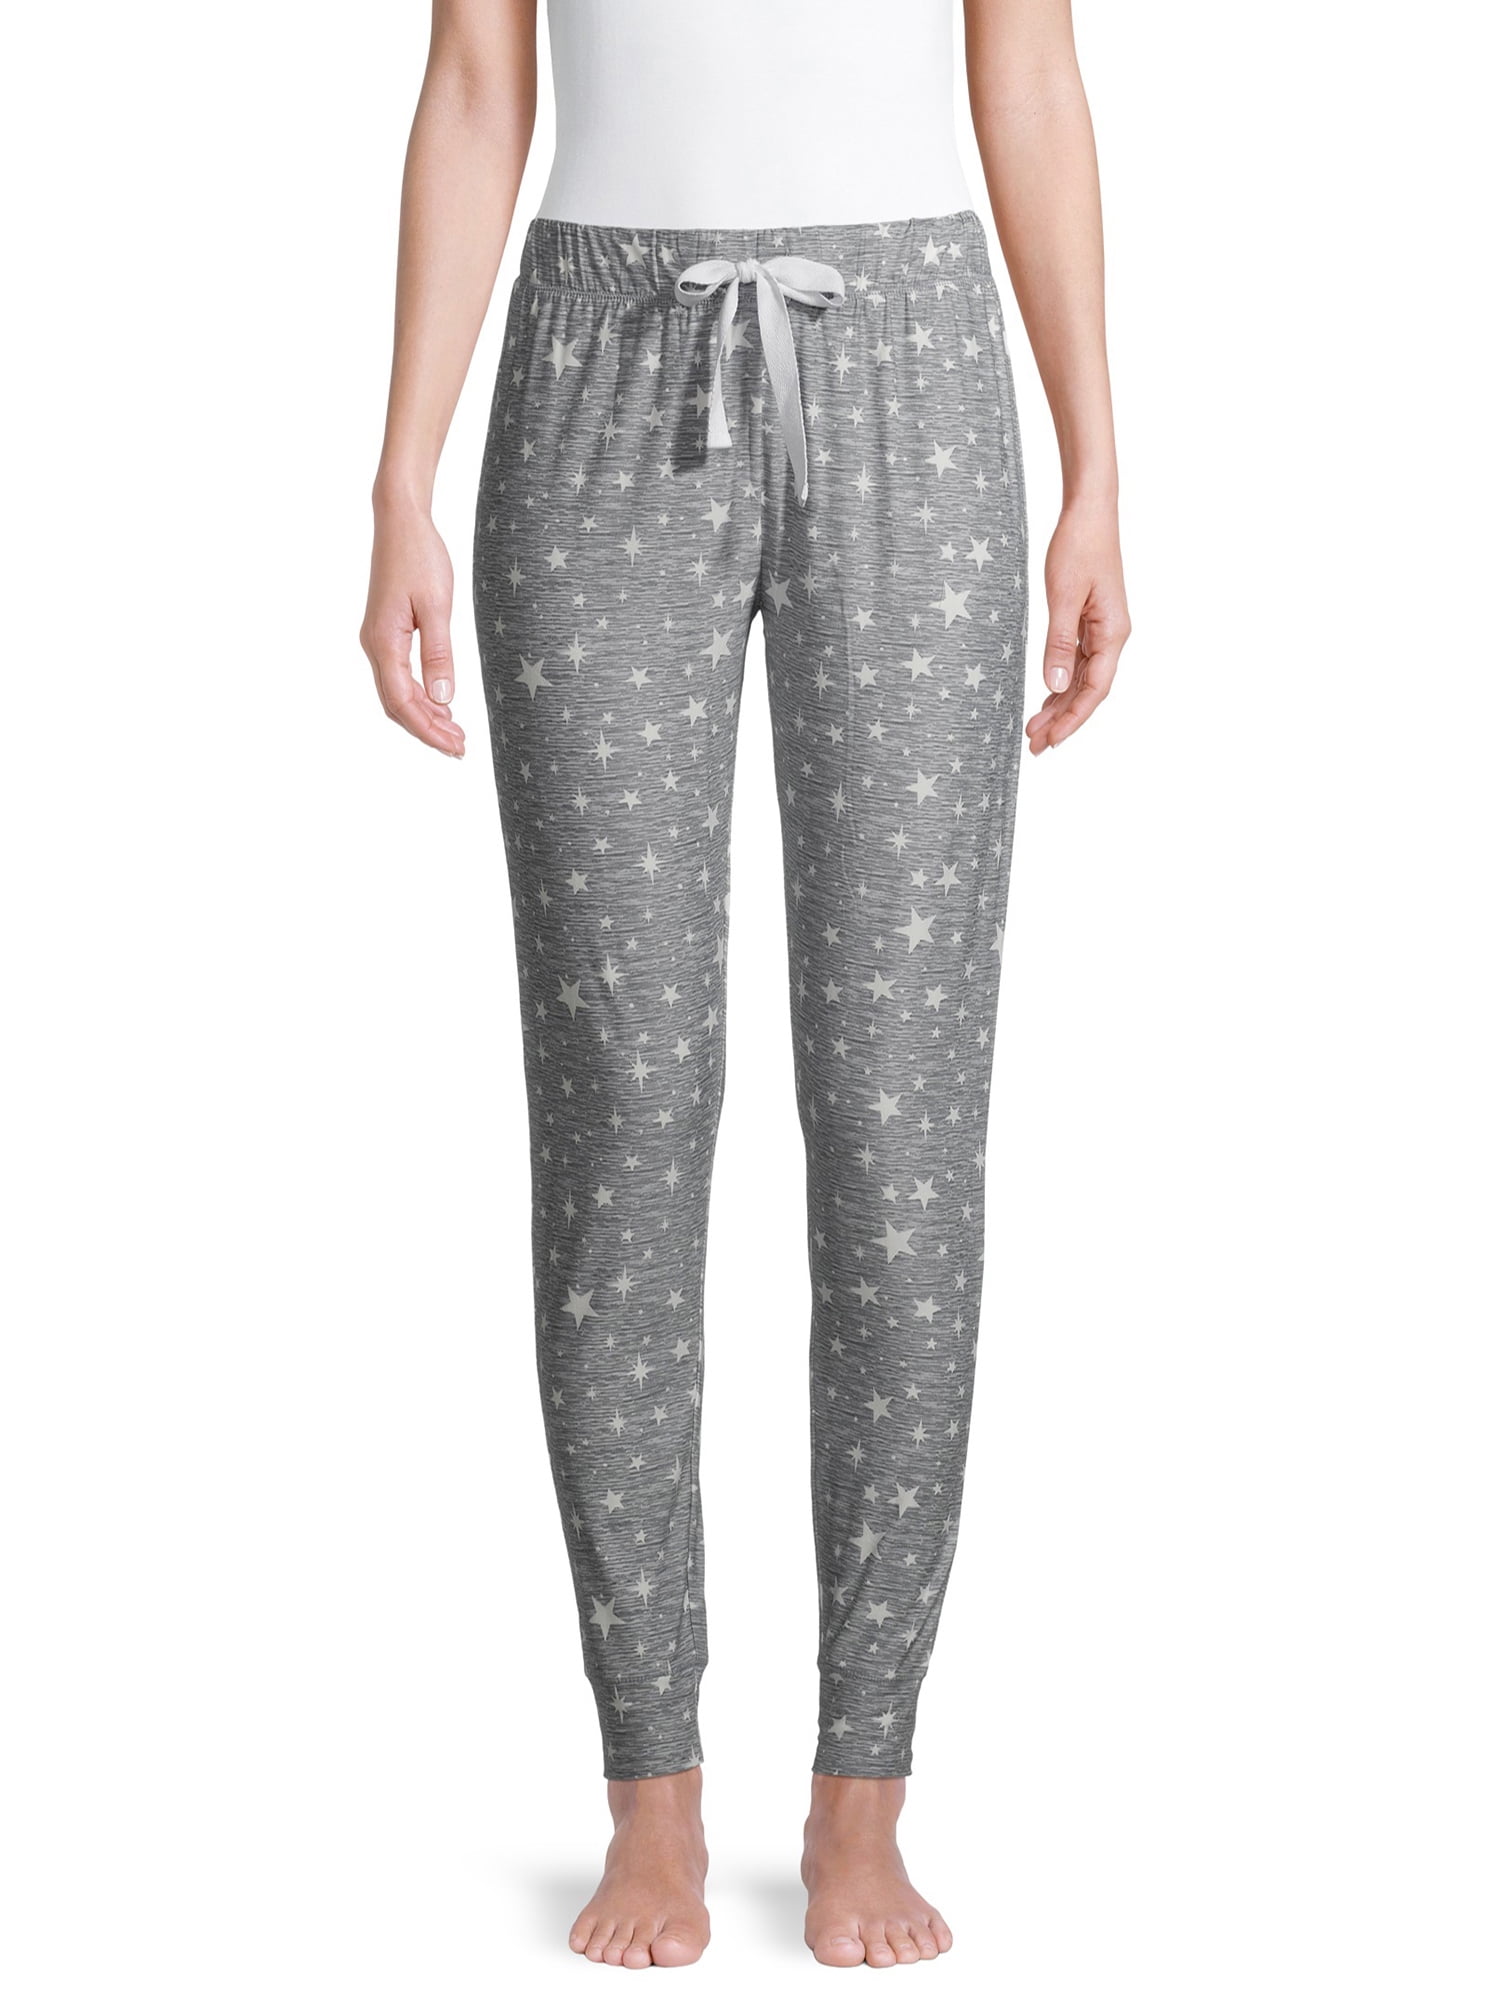 Jaclyn Apparel Women's Yummy Pajama Pants - Walmart.com